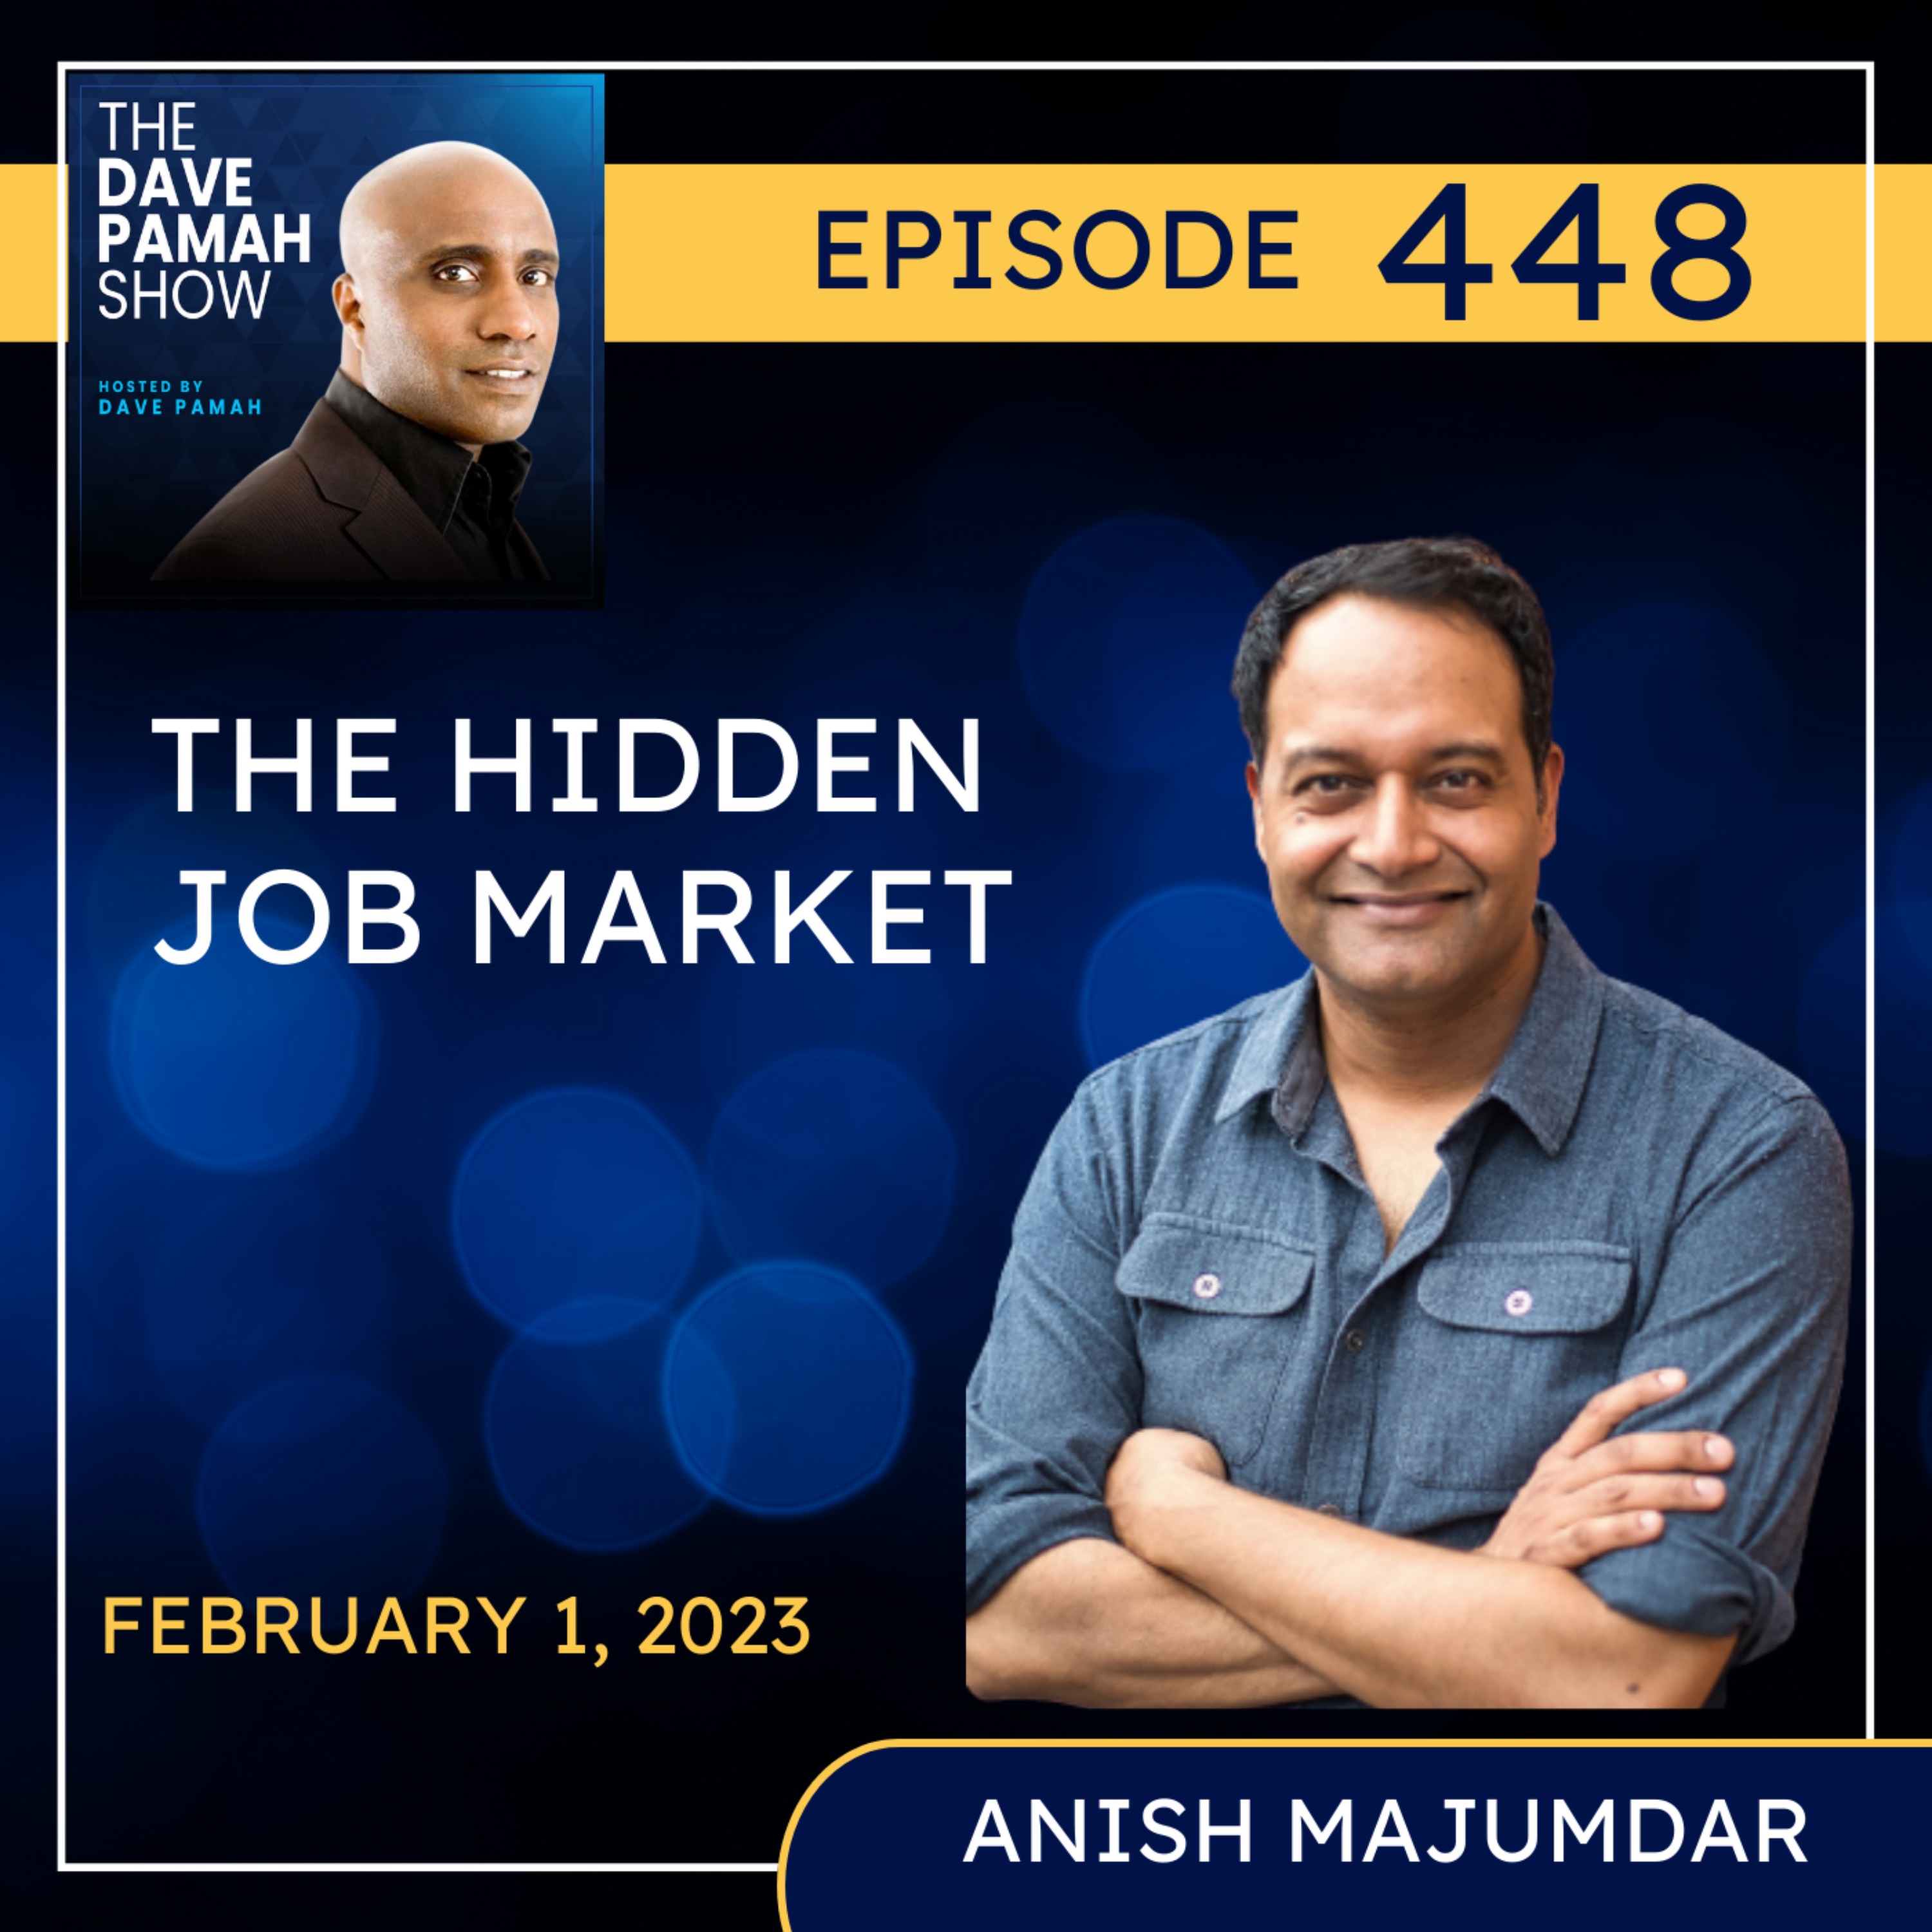 The Hidden Job Market with Anish Majumdar